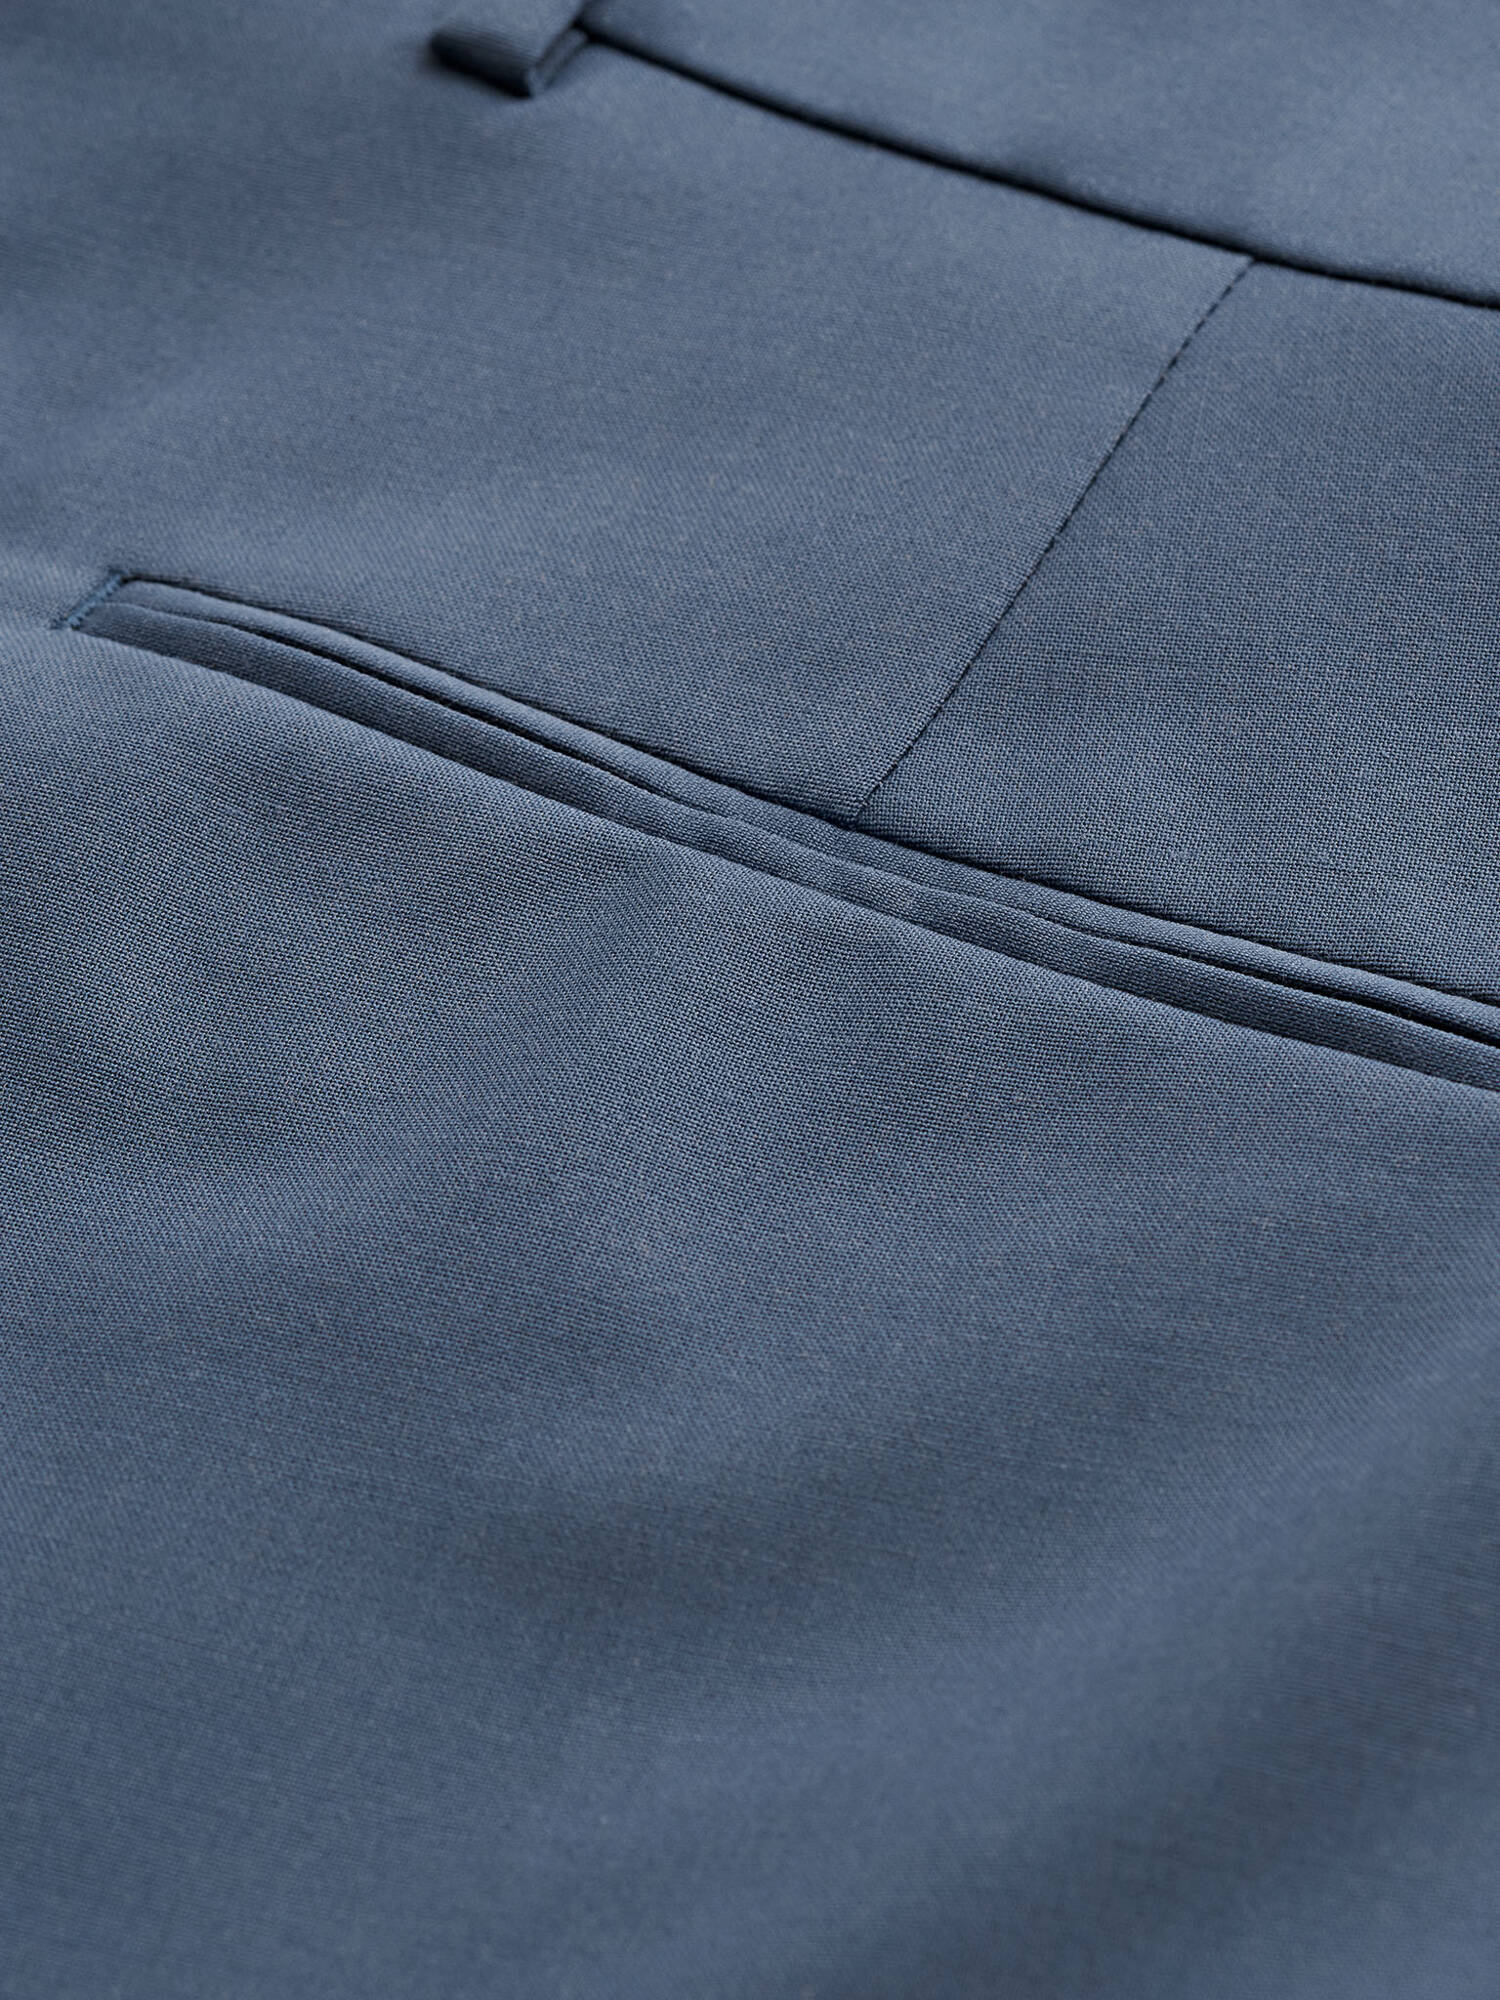 TIGER OF SWEDEN Tenutas Trousers in Dusty Blue T70699019| eightywingold 